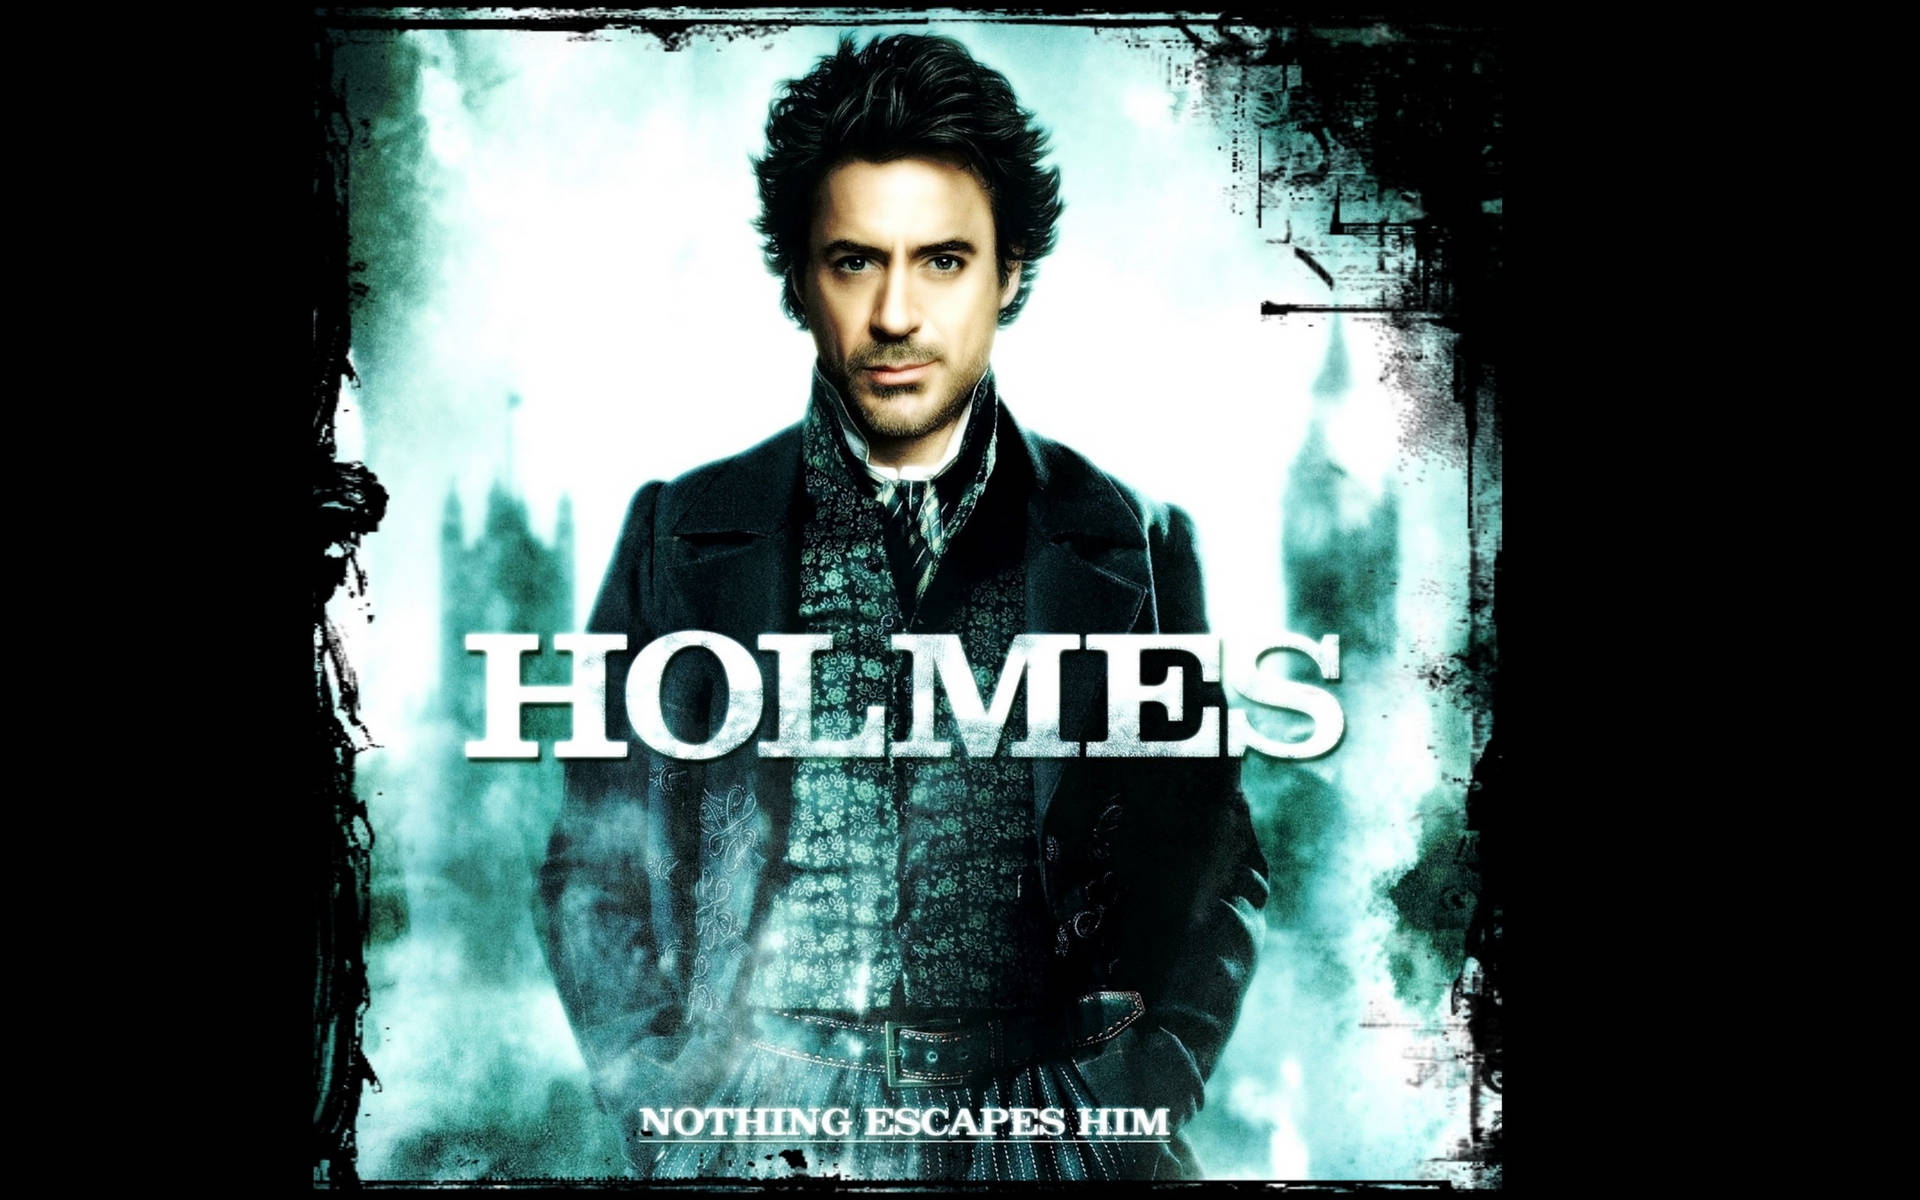 Sherlock Holmes 2009 Movie Poster Background